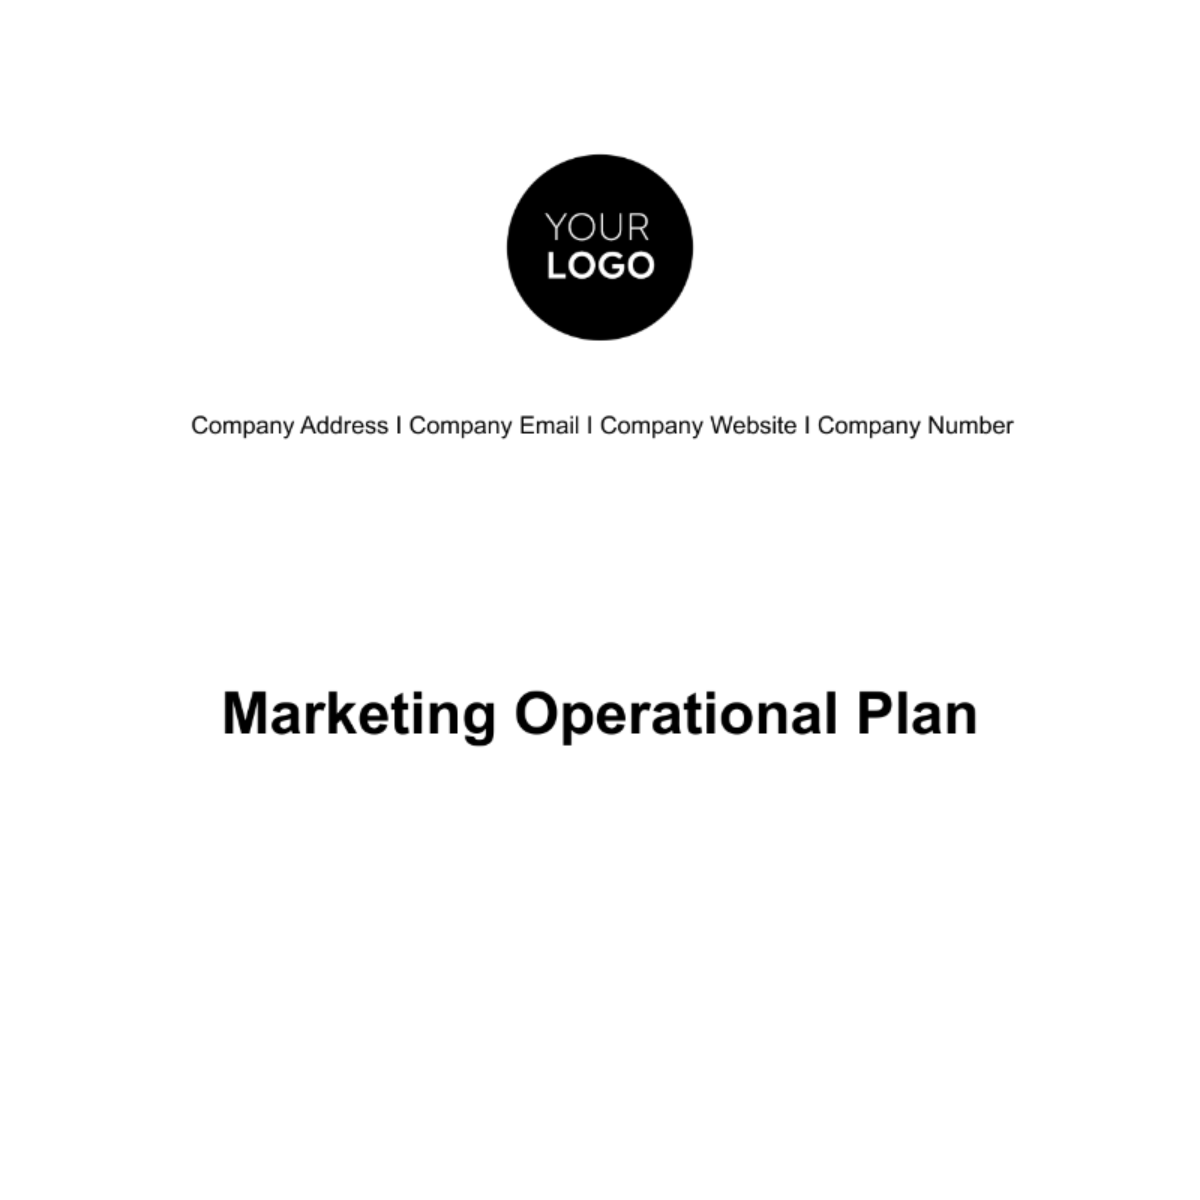 Marketing Operational Plan Template